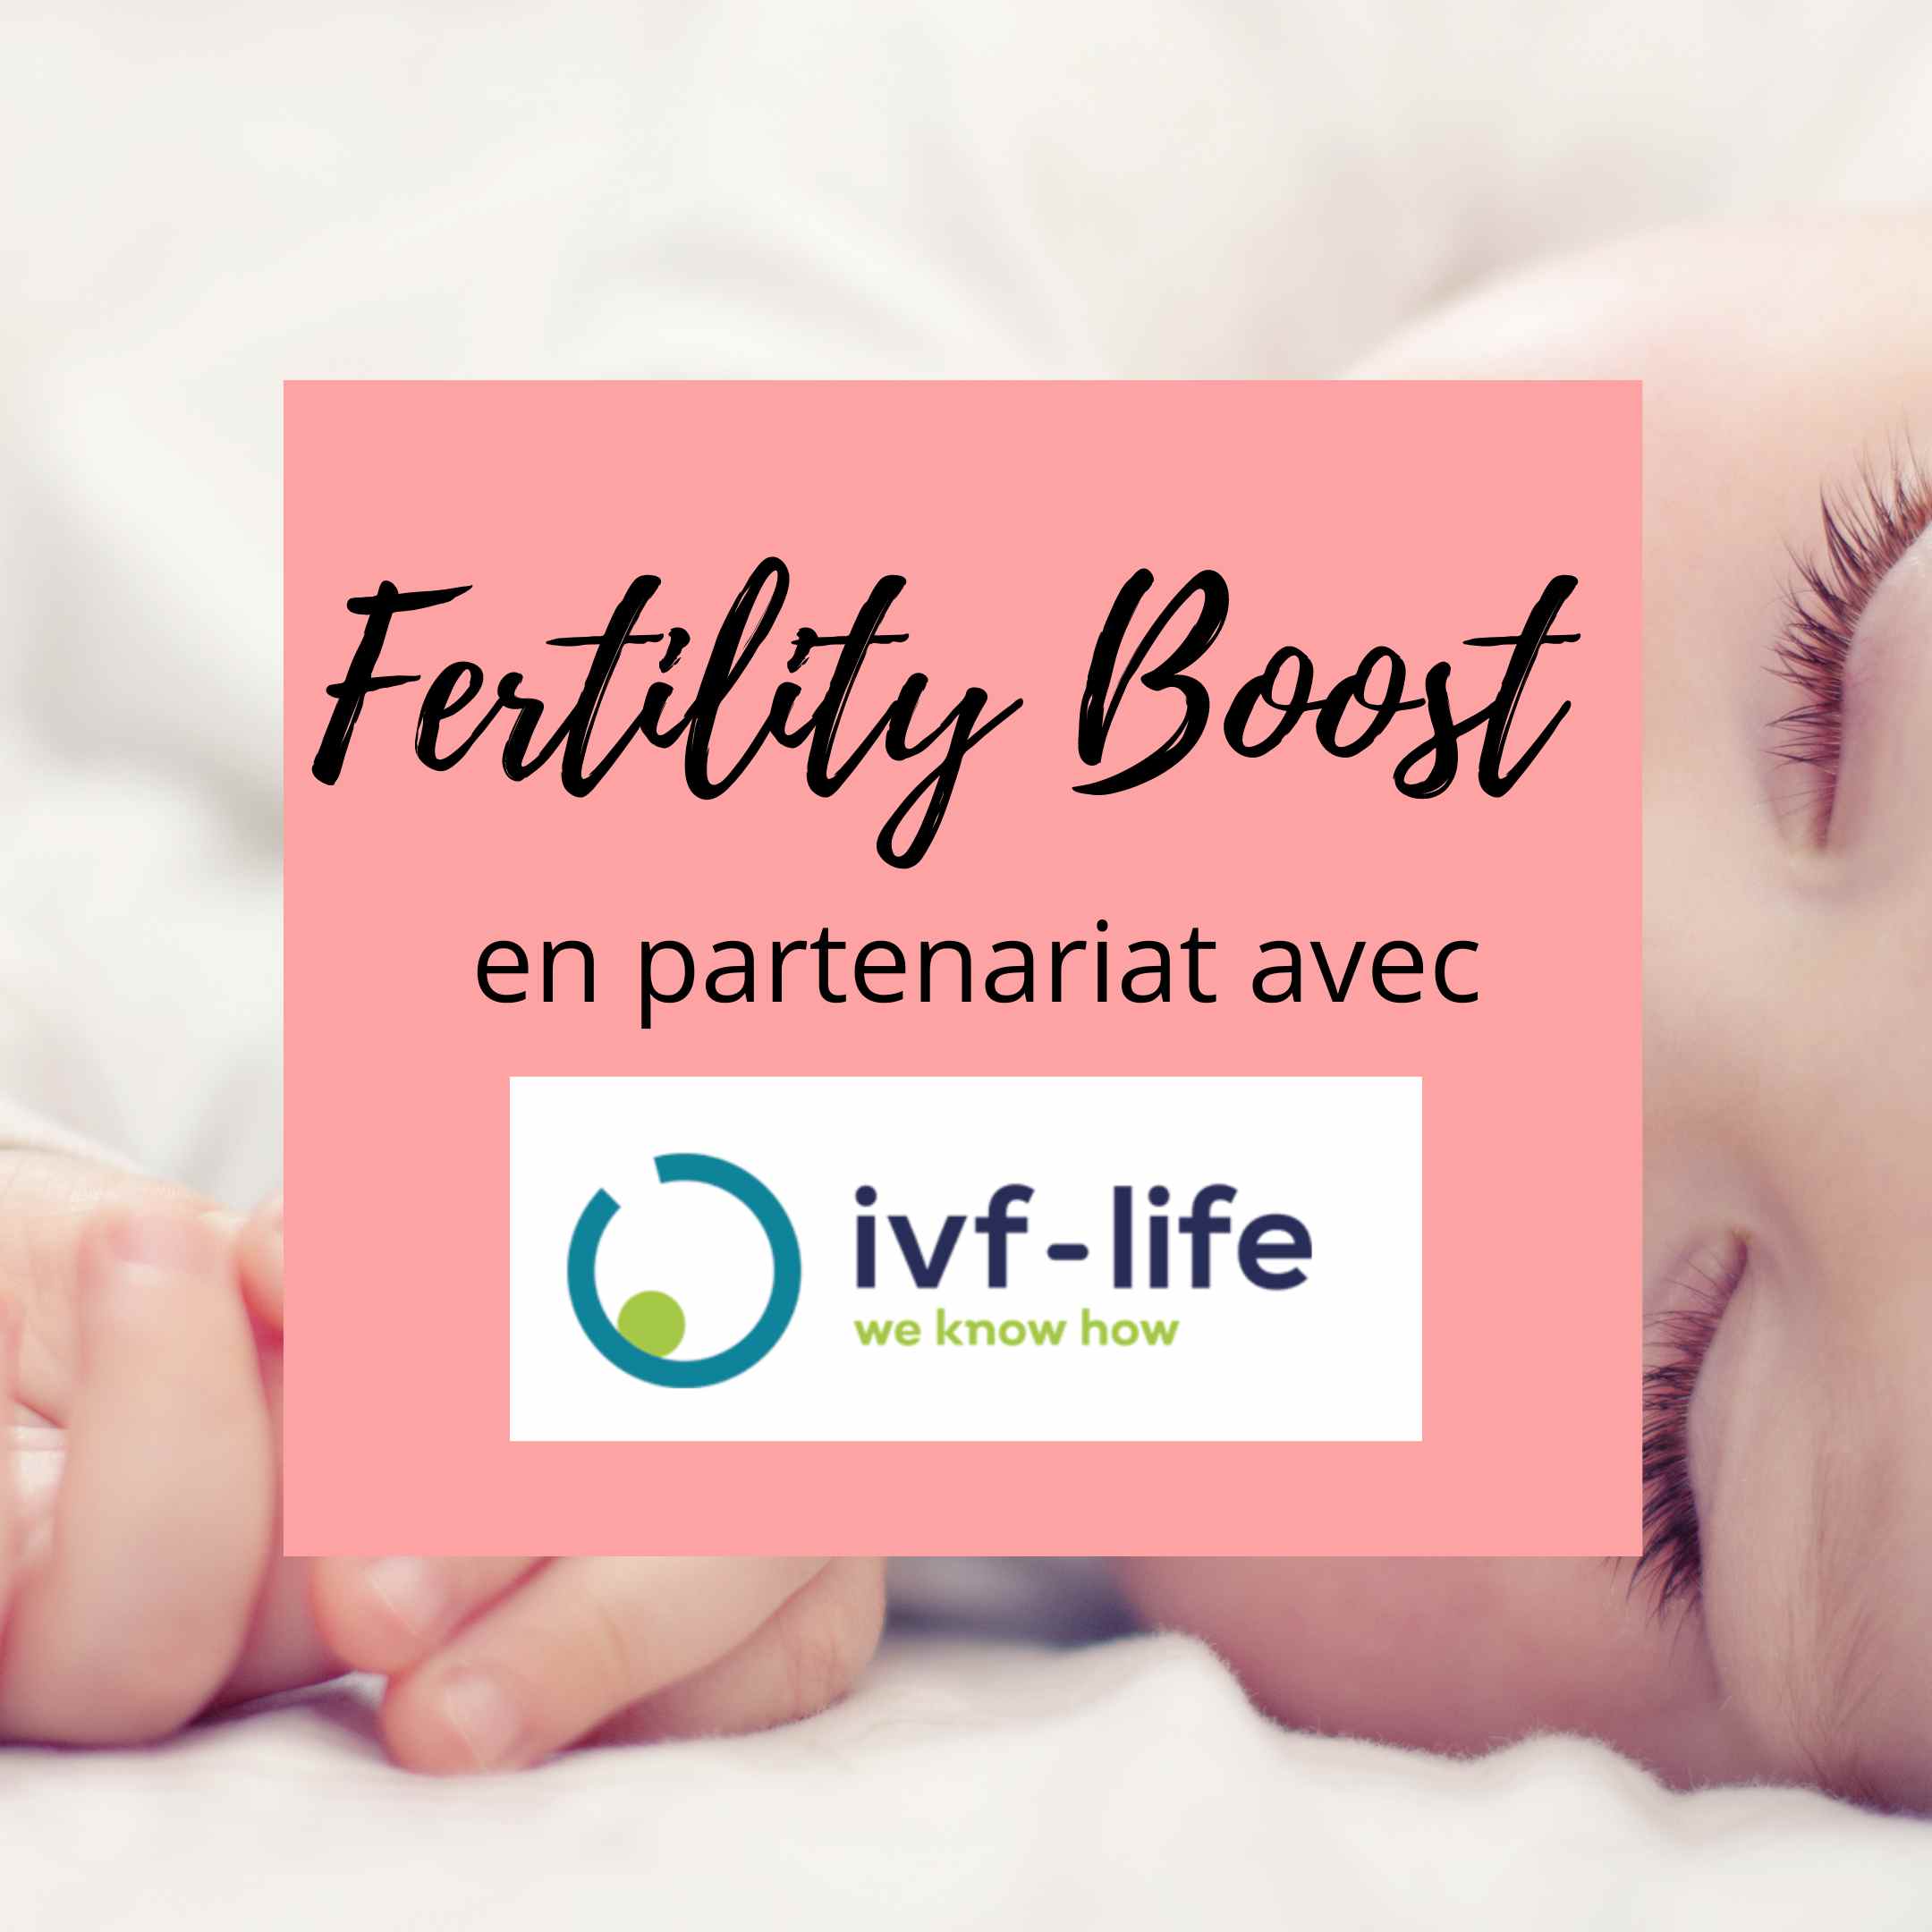 FERTILITY BOOST IVF LIFE